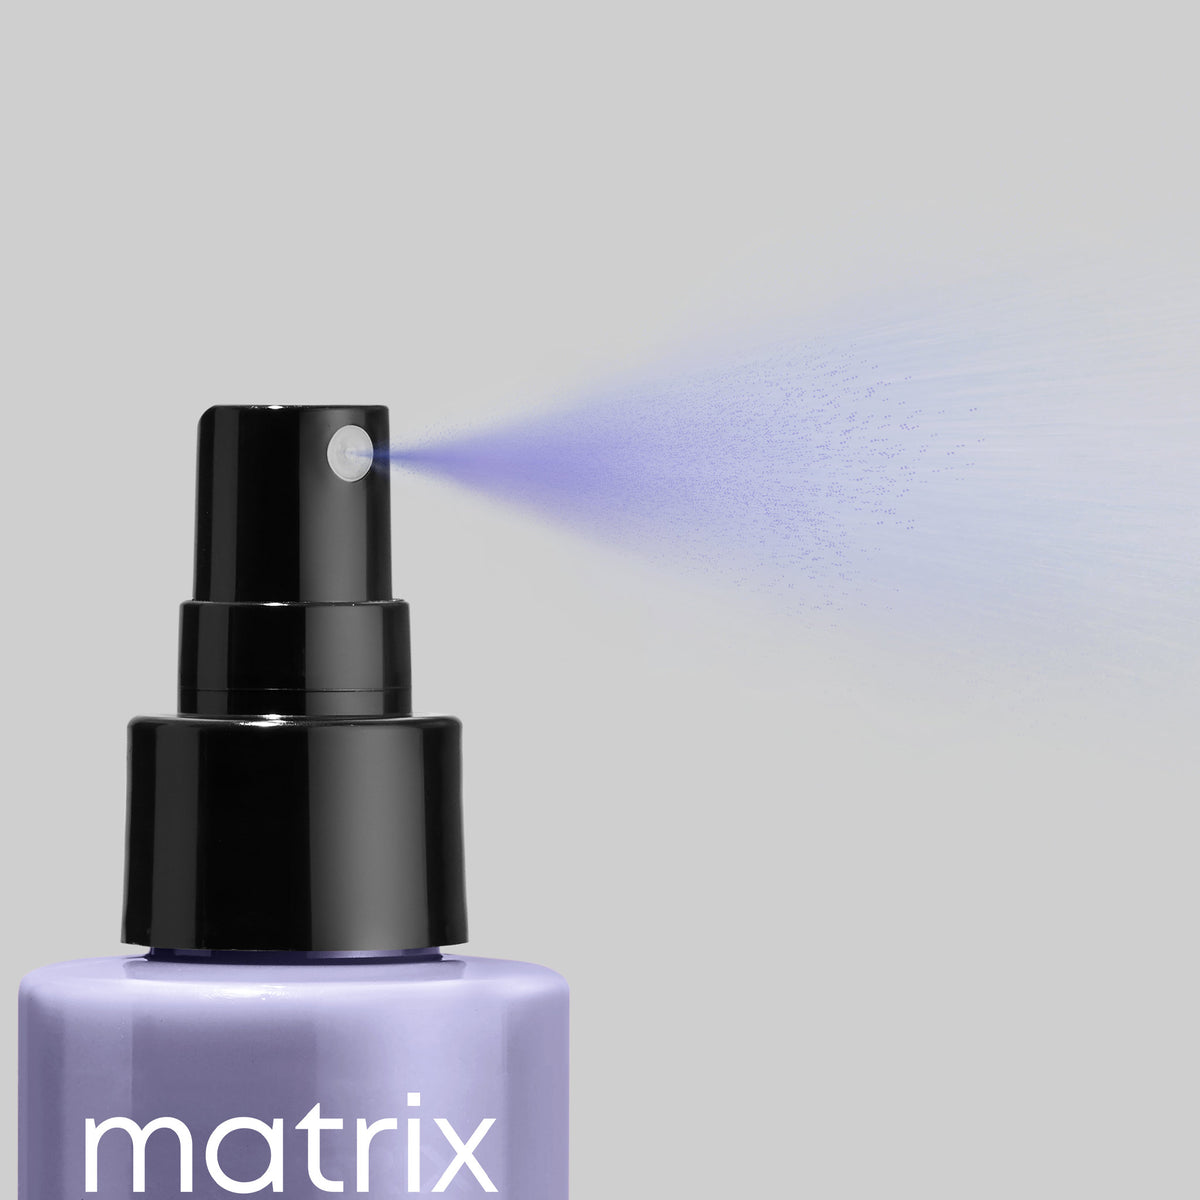 Matrix So Silver All-In-One Toning Spray 200ml